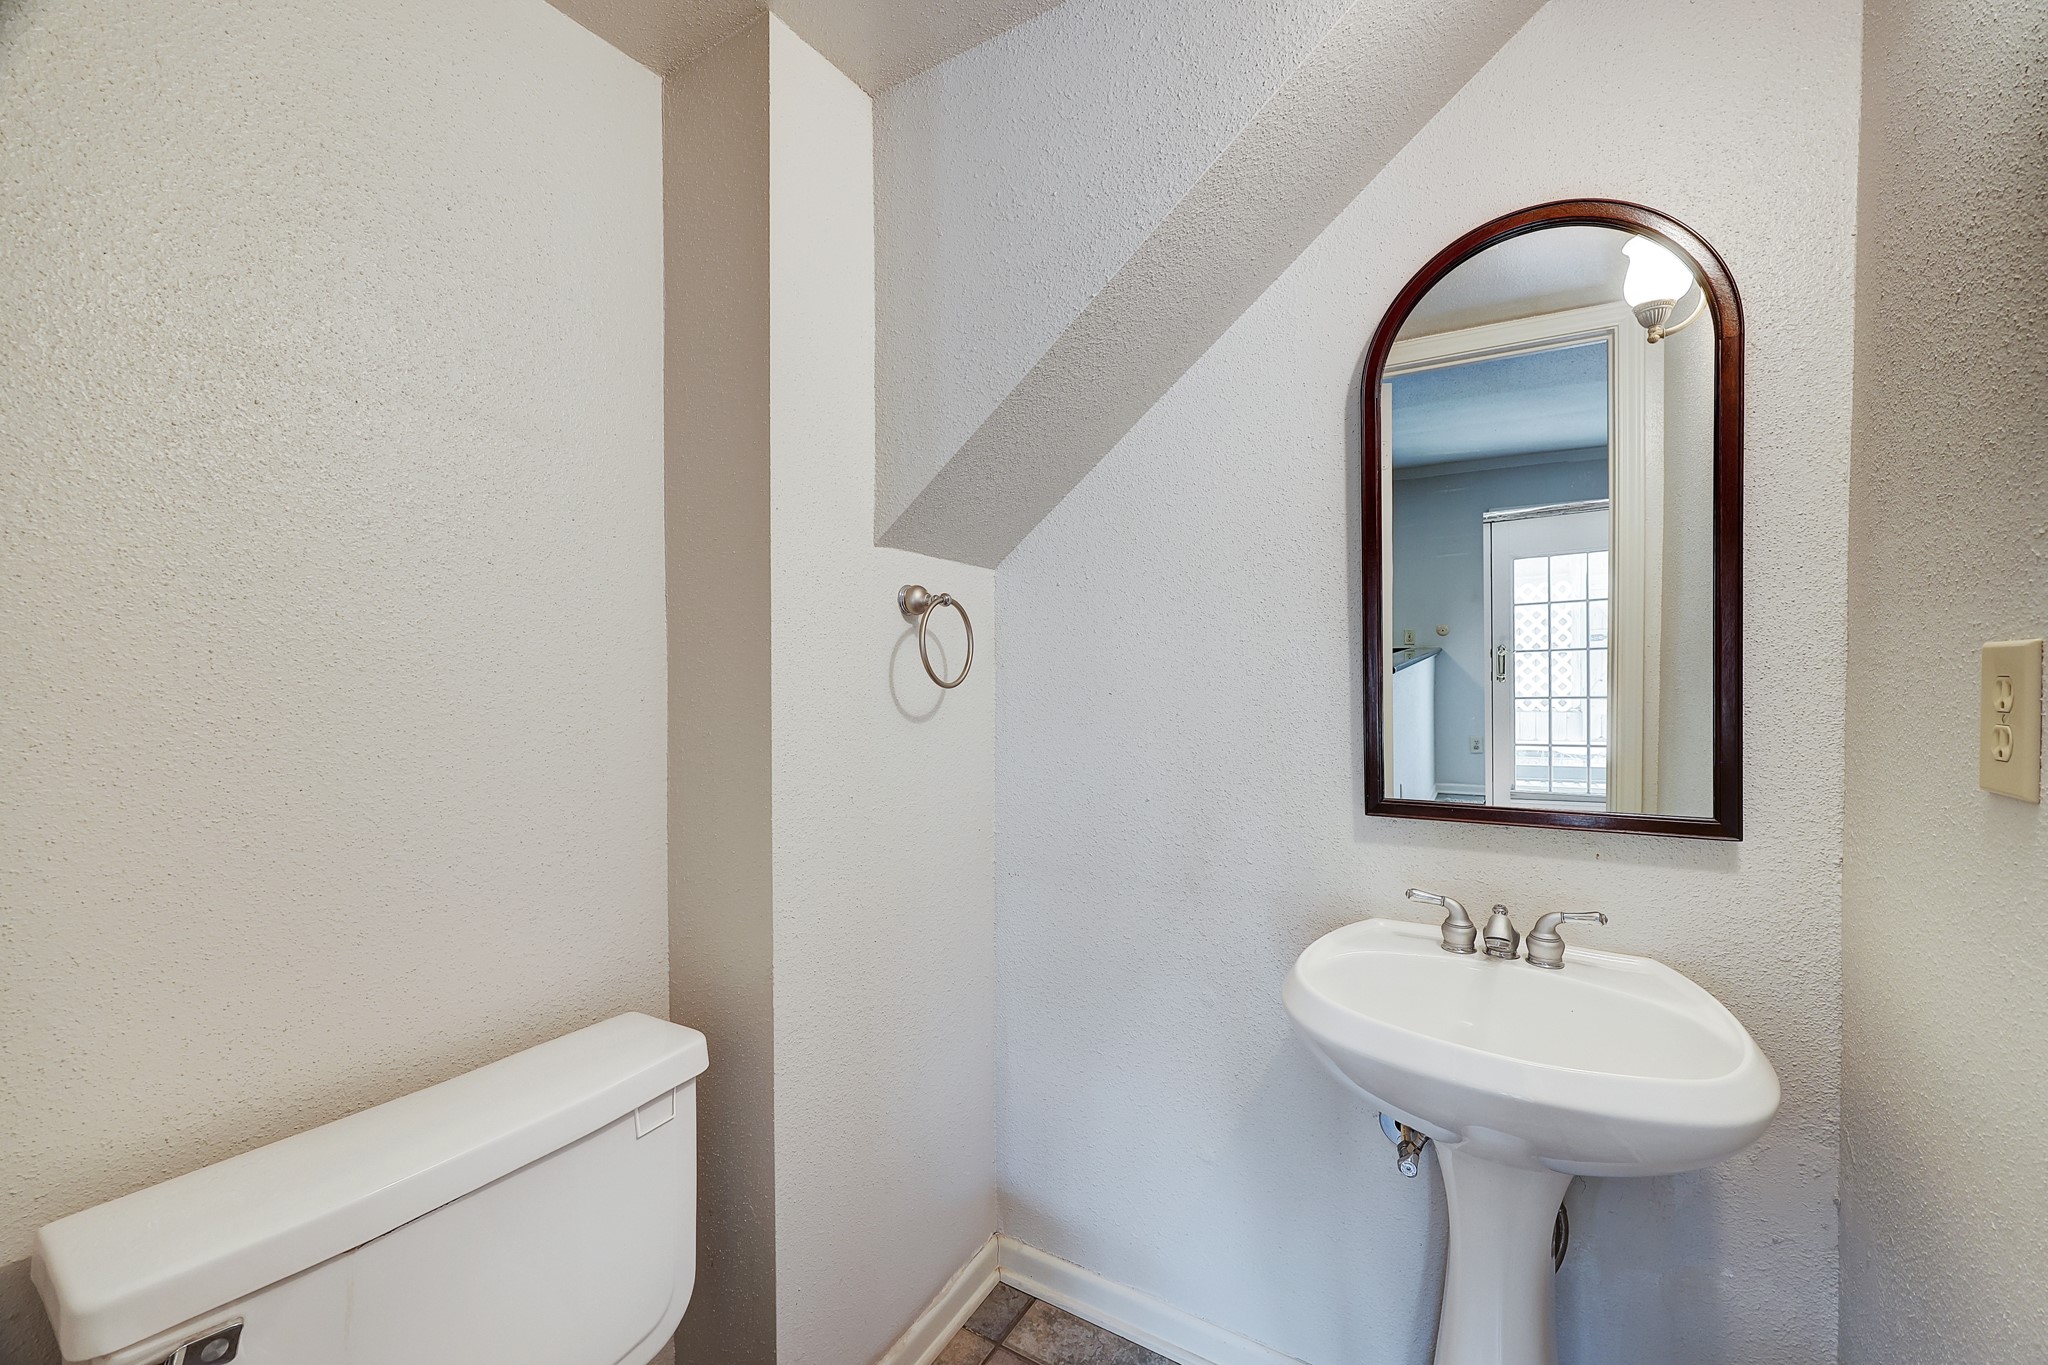 [Powder Room]
This elegant half bath serves the living areas and has a pedestal sink.